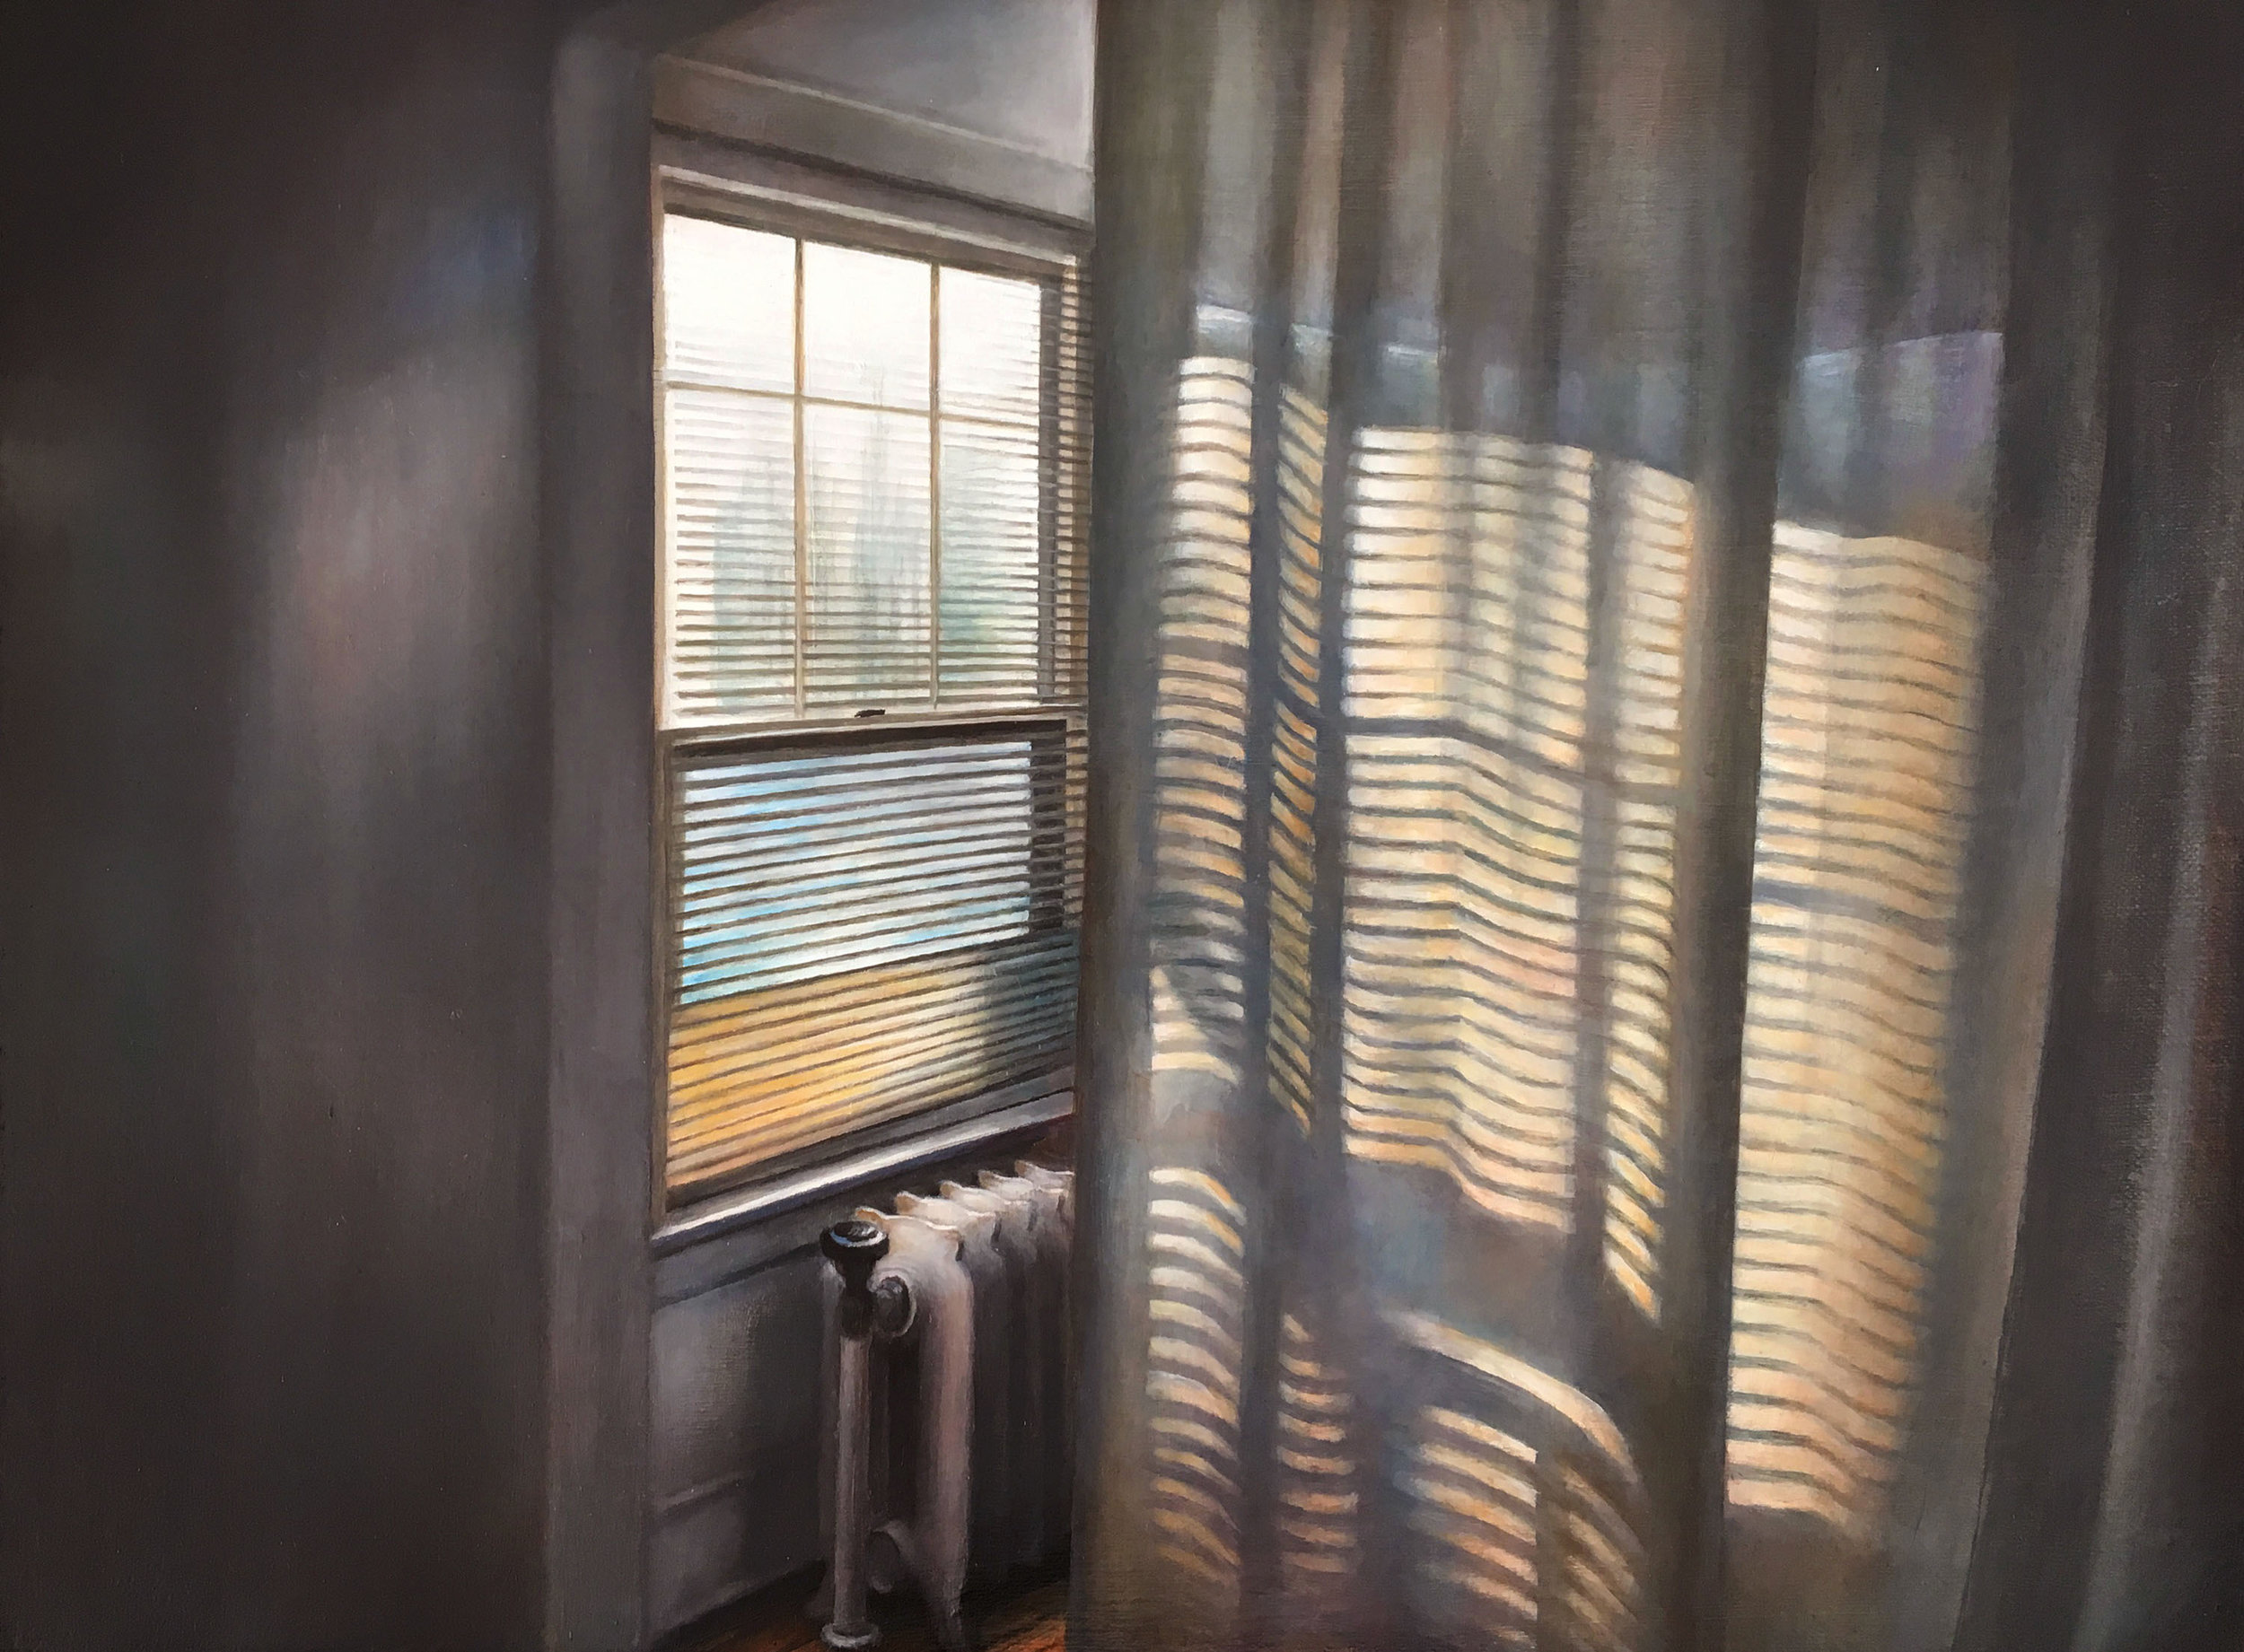   Sunroom Curtain   2017  Oil on linen  12 x 16 inches 